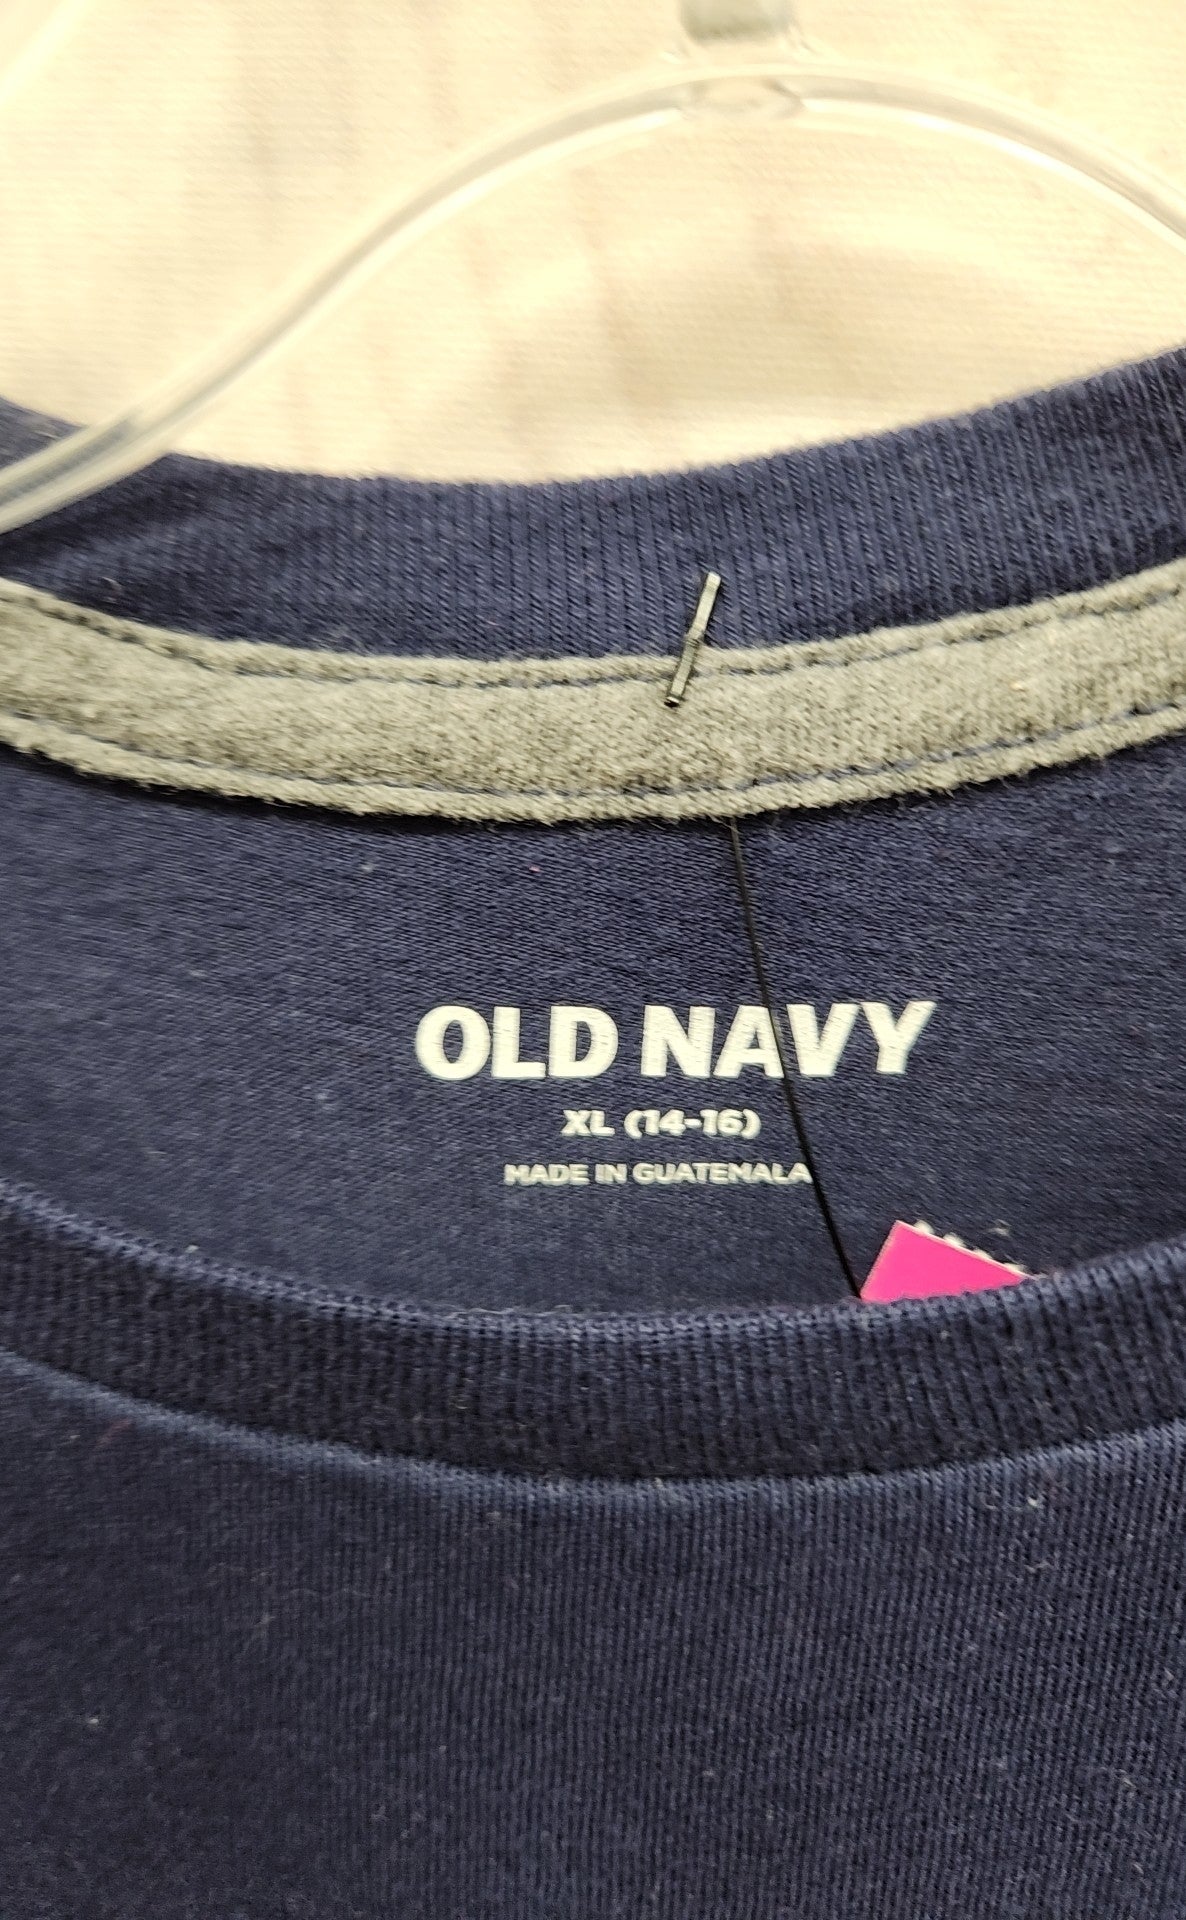 Old Navy Boy's Size 14/16 Navy Shirt